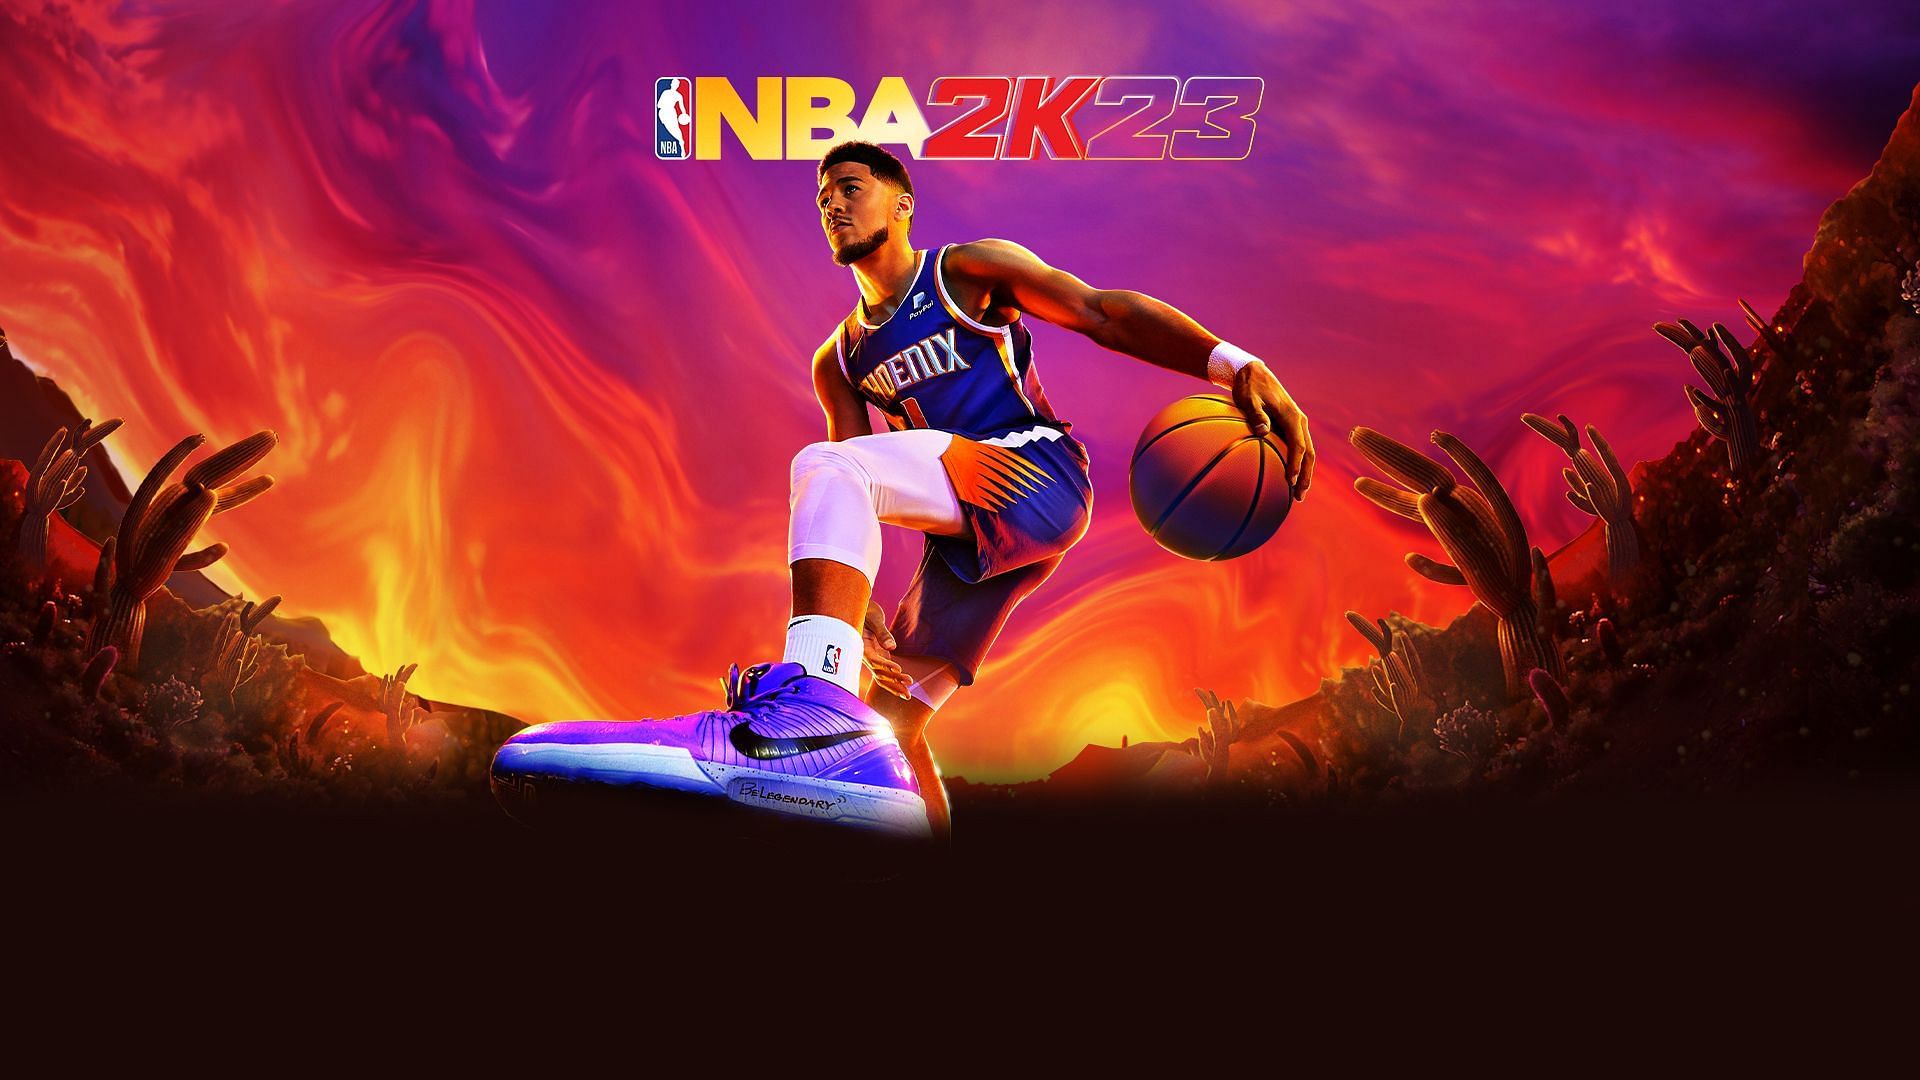 NBA 2K23 will be released on September 9th.